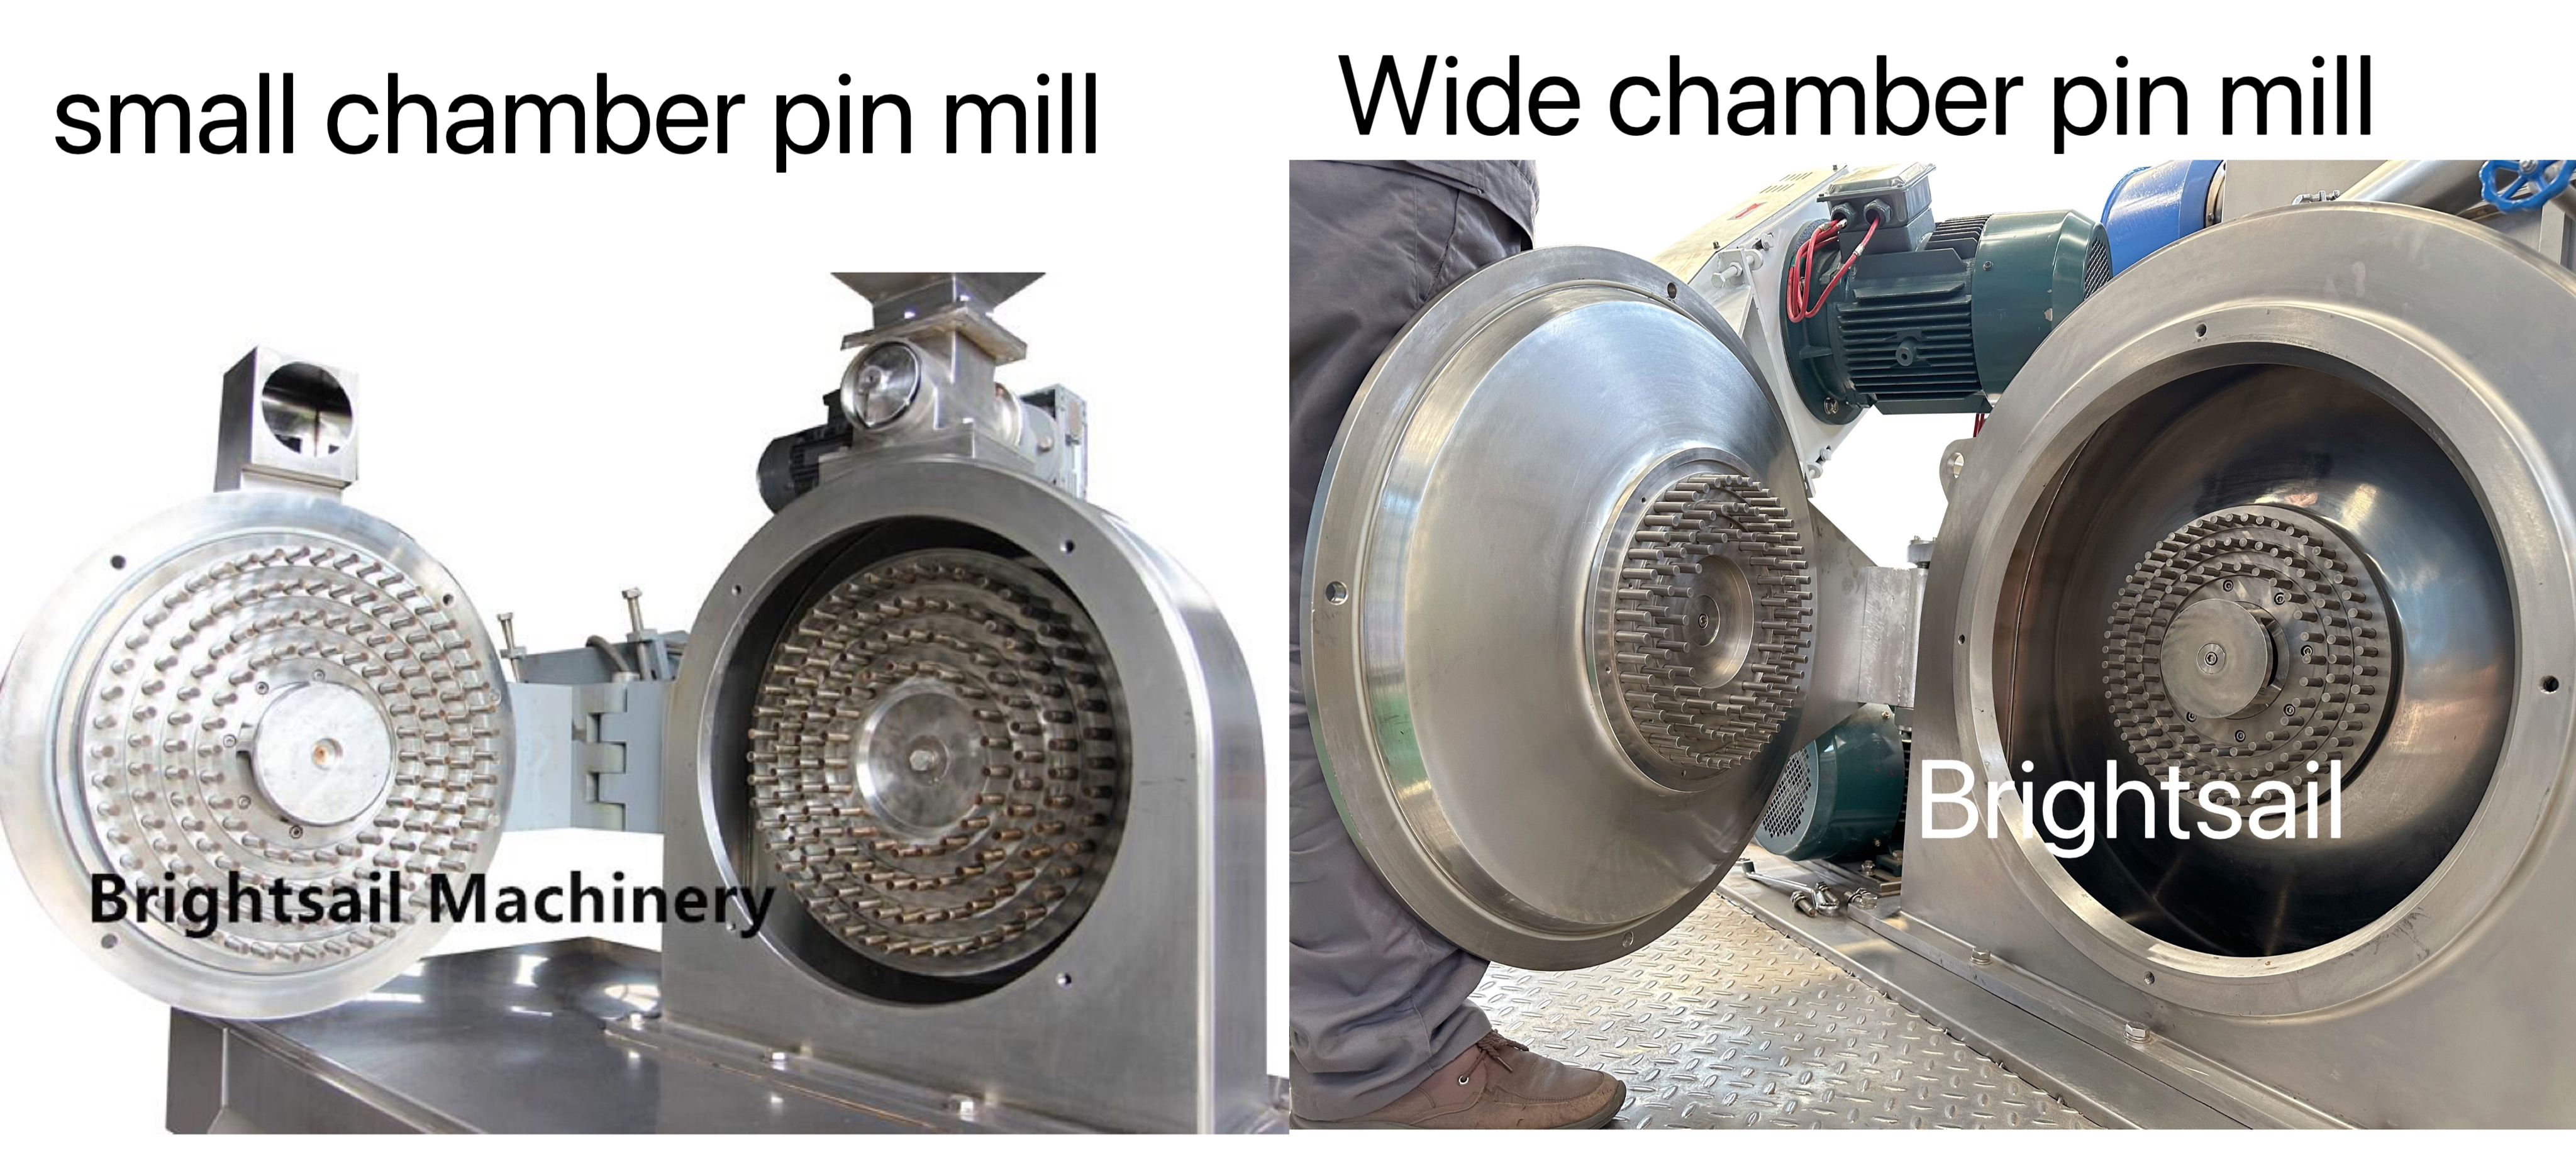 Pin Mill